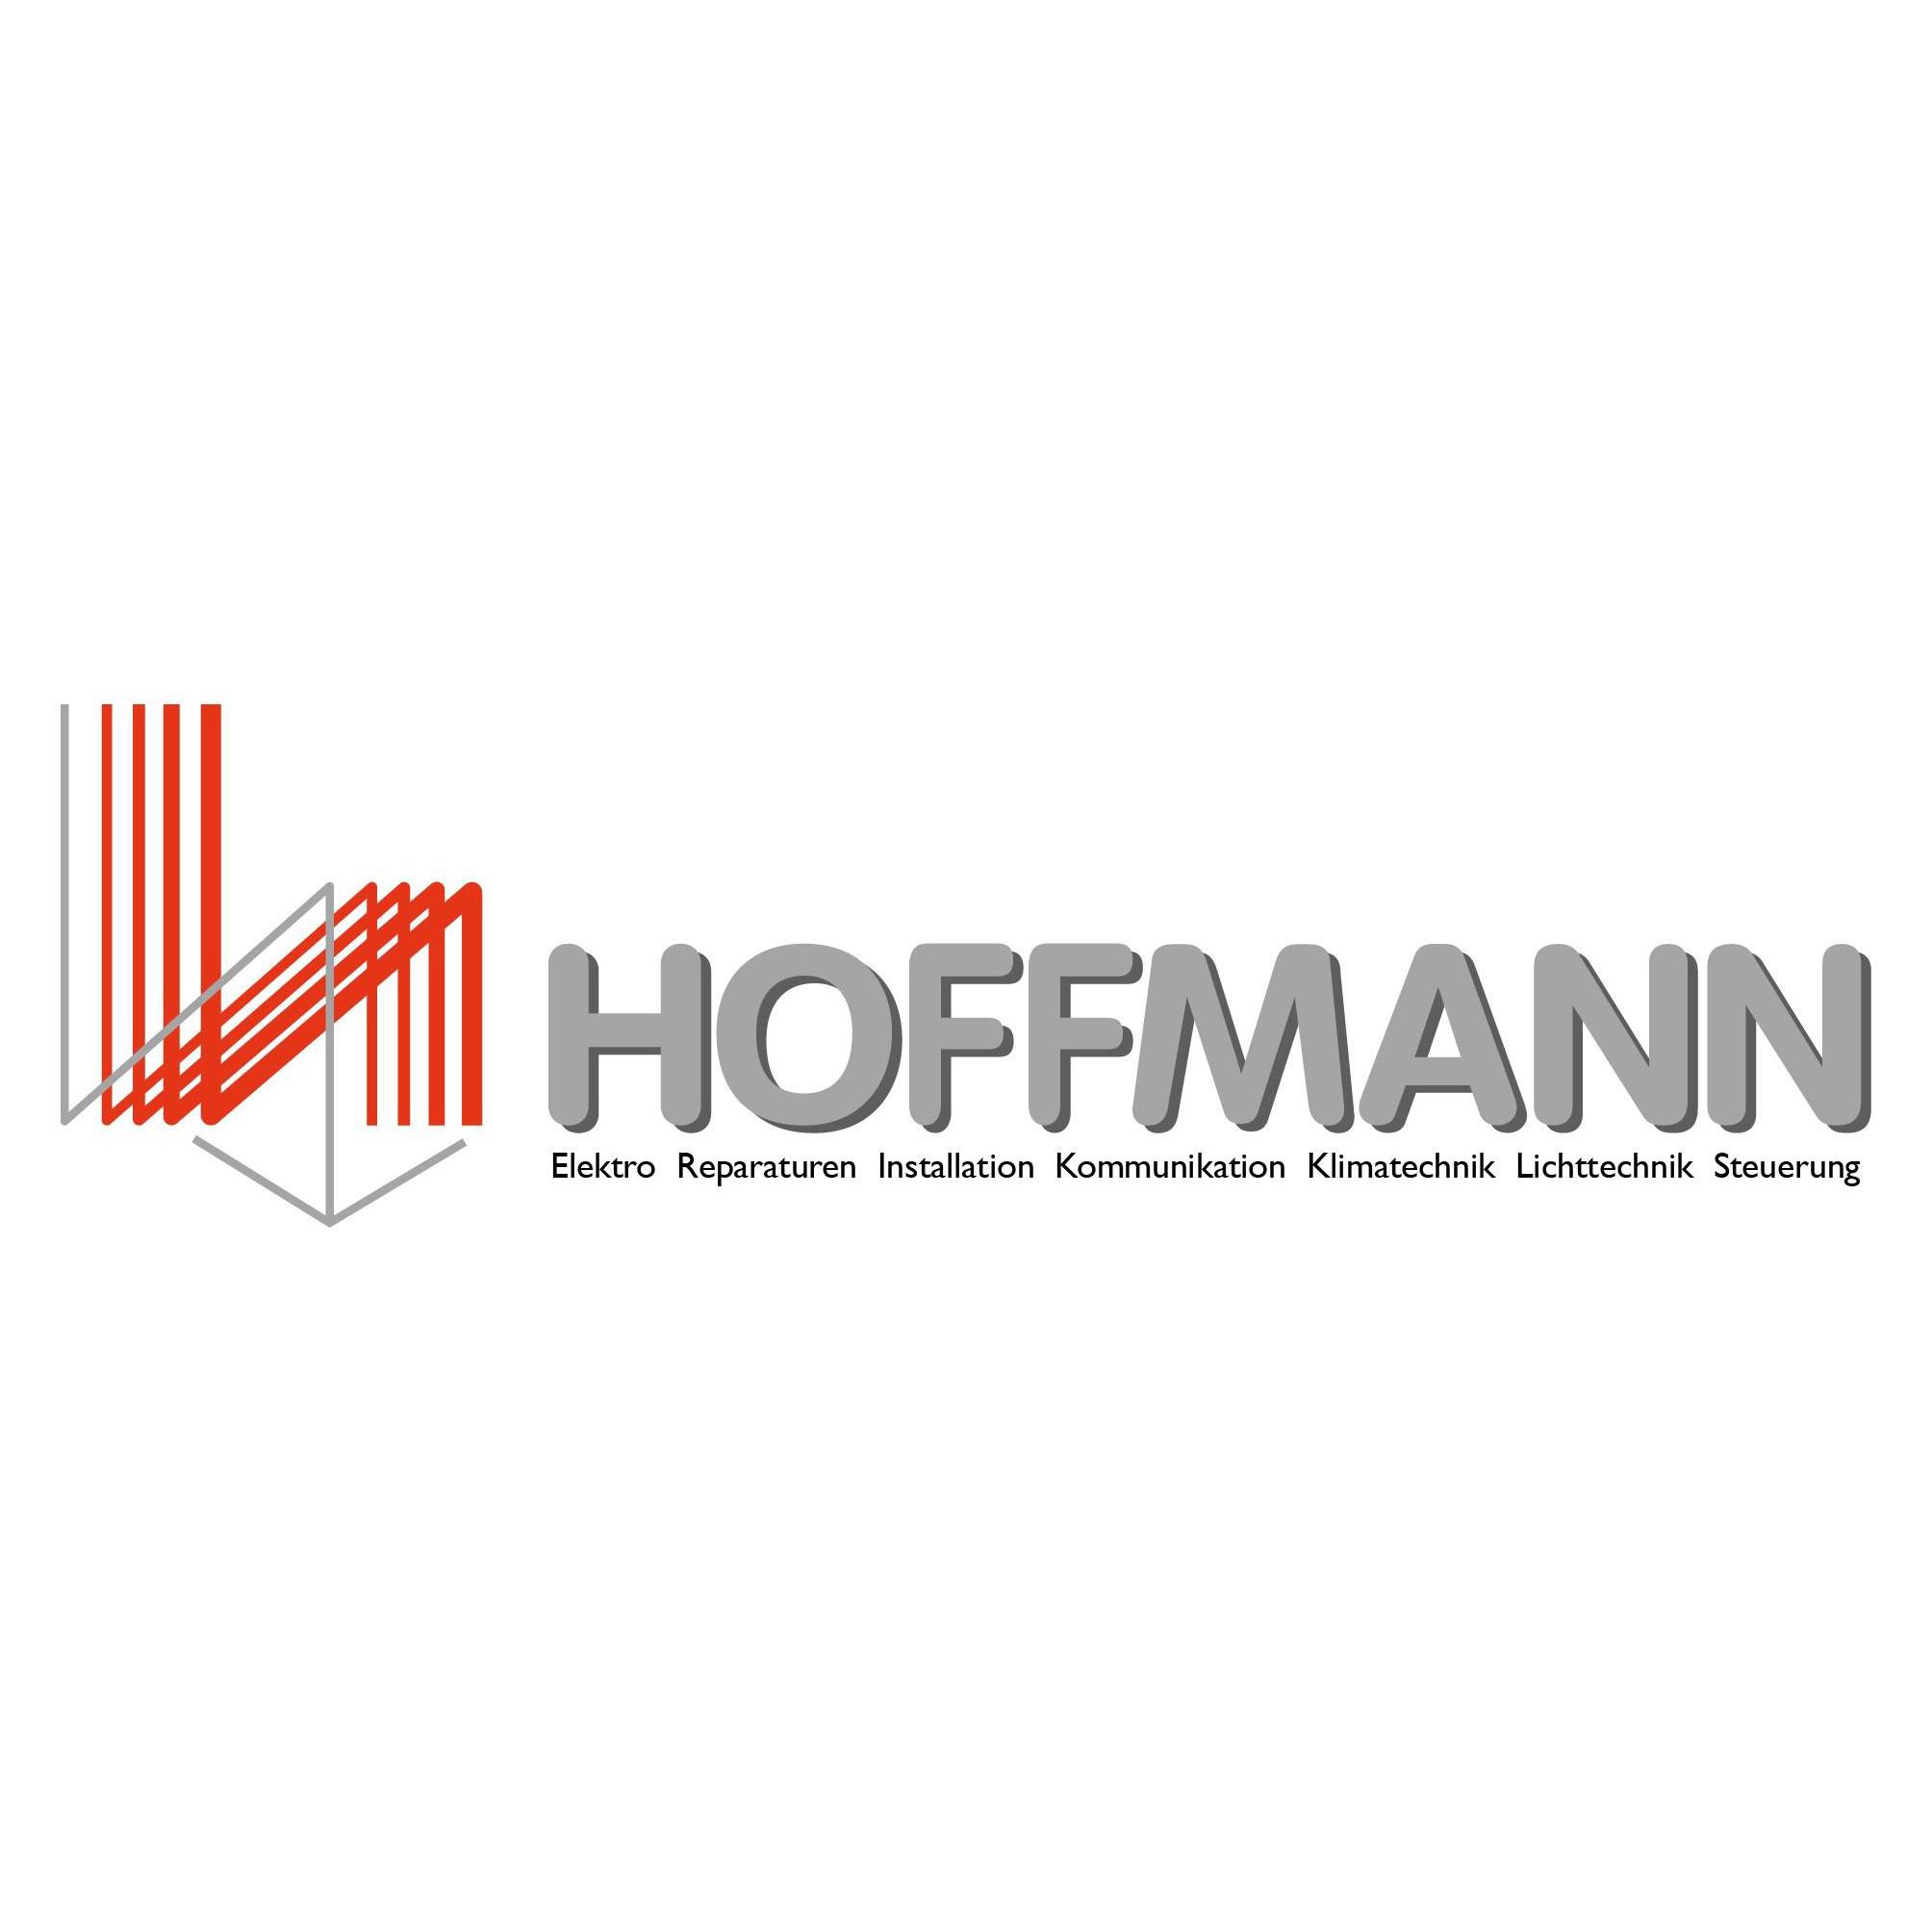 Logo Hoffmann HRS GmbH & Co. KG